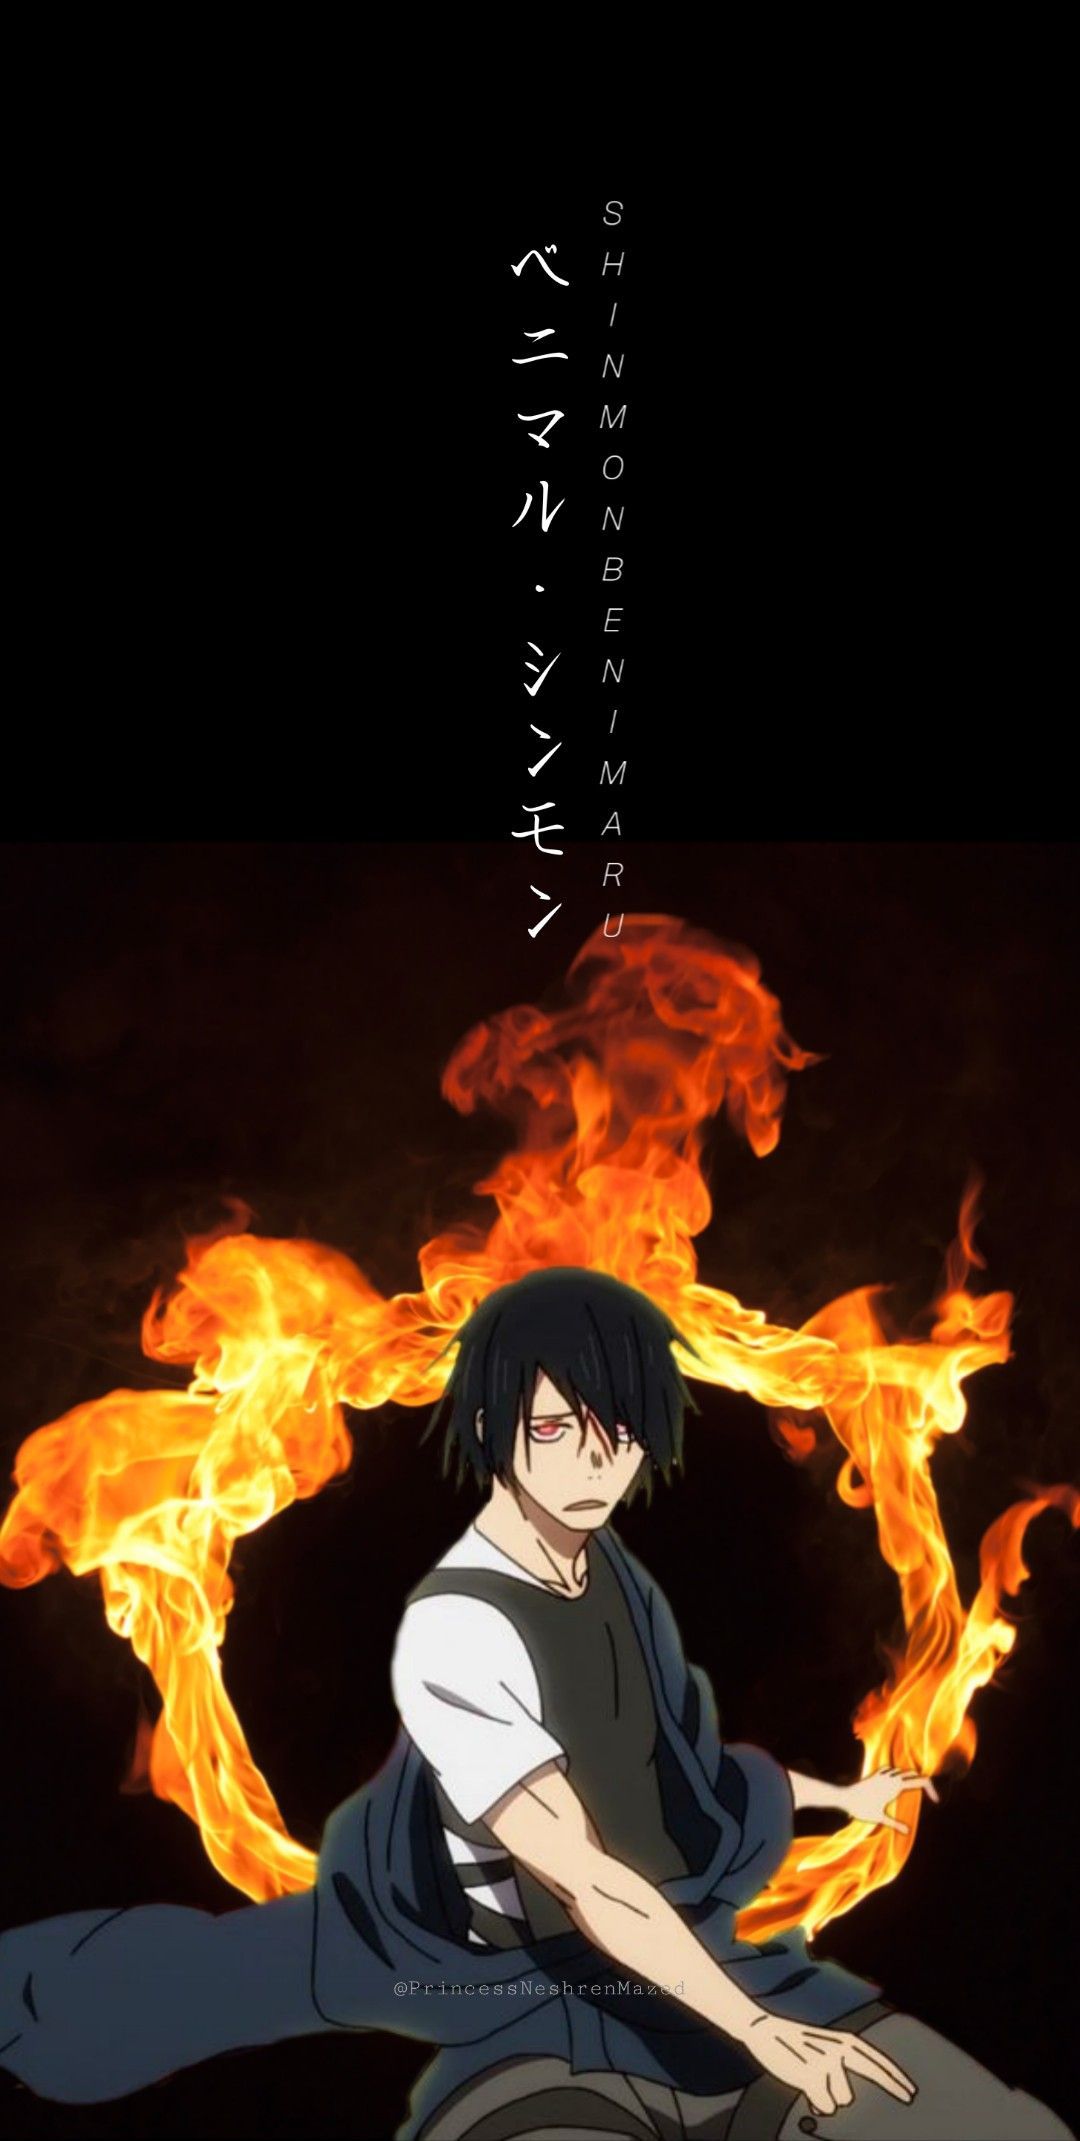 Fire Force (Shinmon Benimaru wallpaper). Anime background, Cool anime wallpaper, Anime background wallpaper